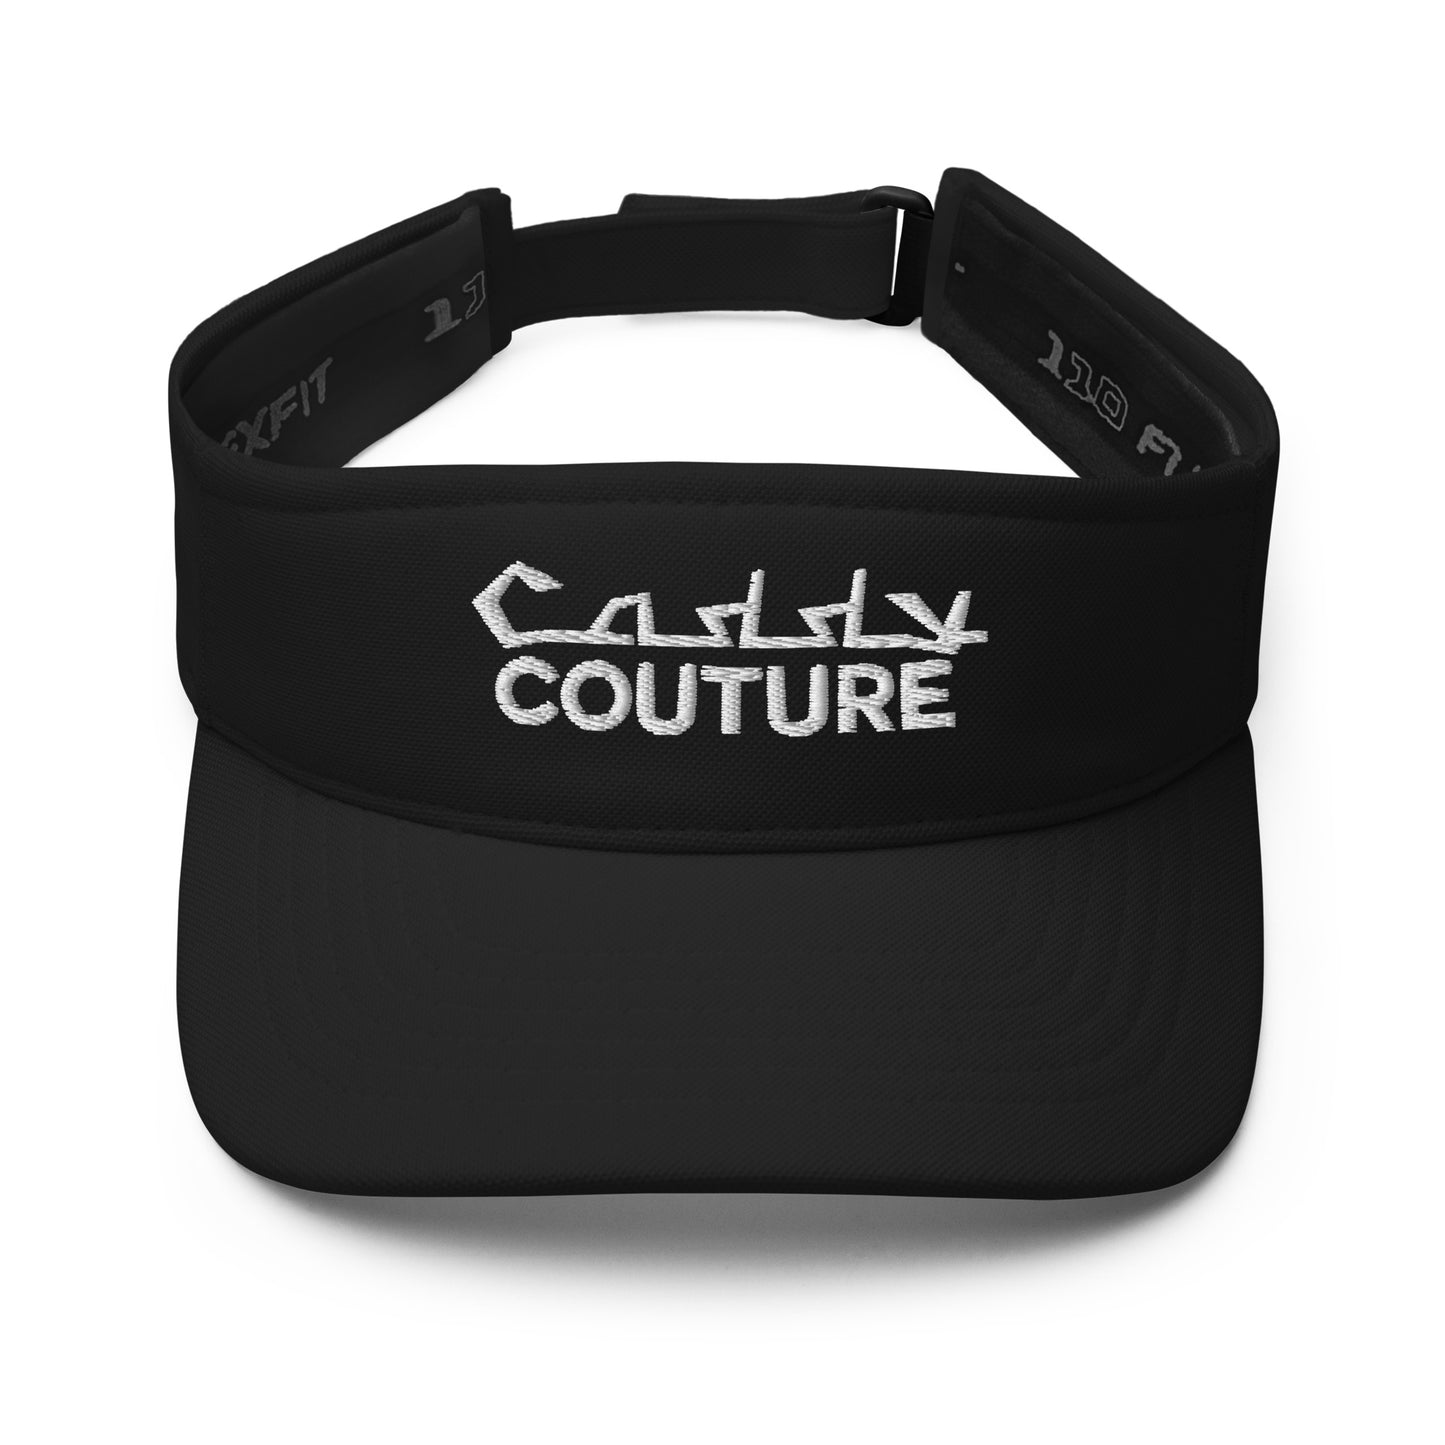 Caddy Couture Visor - Black